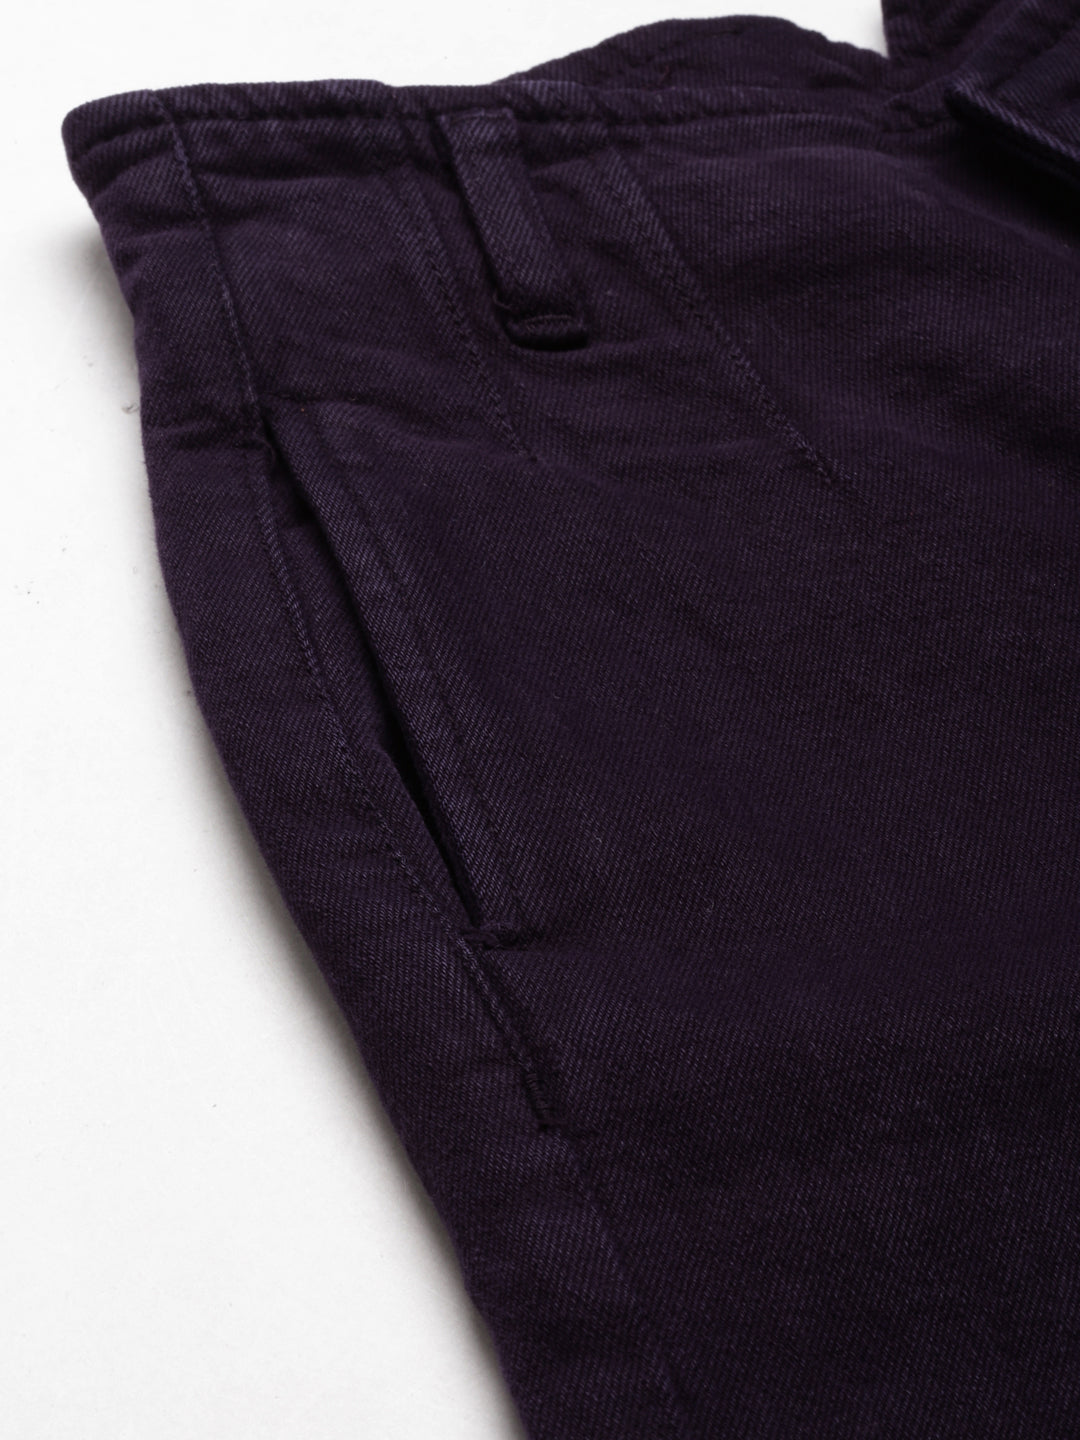 Women Purple Solid Slim Fit Denim Jeans